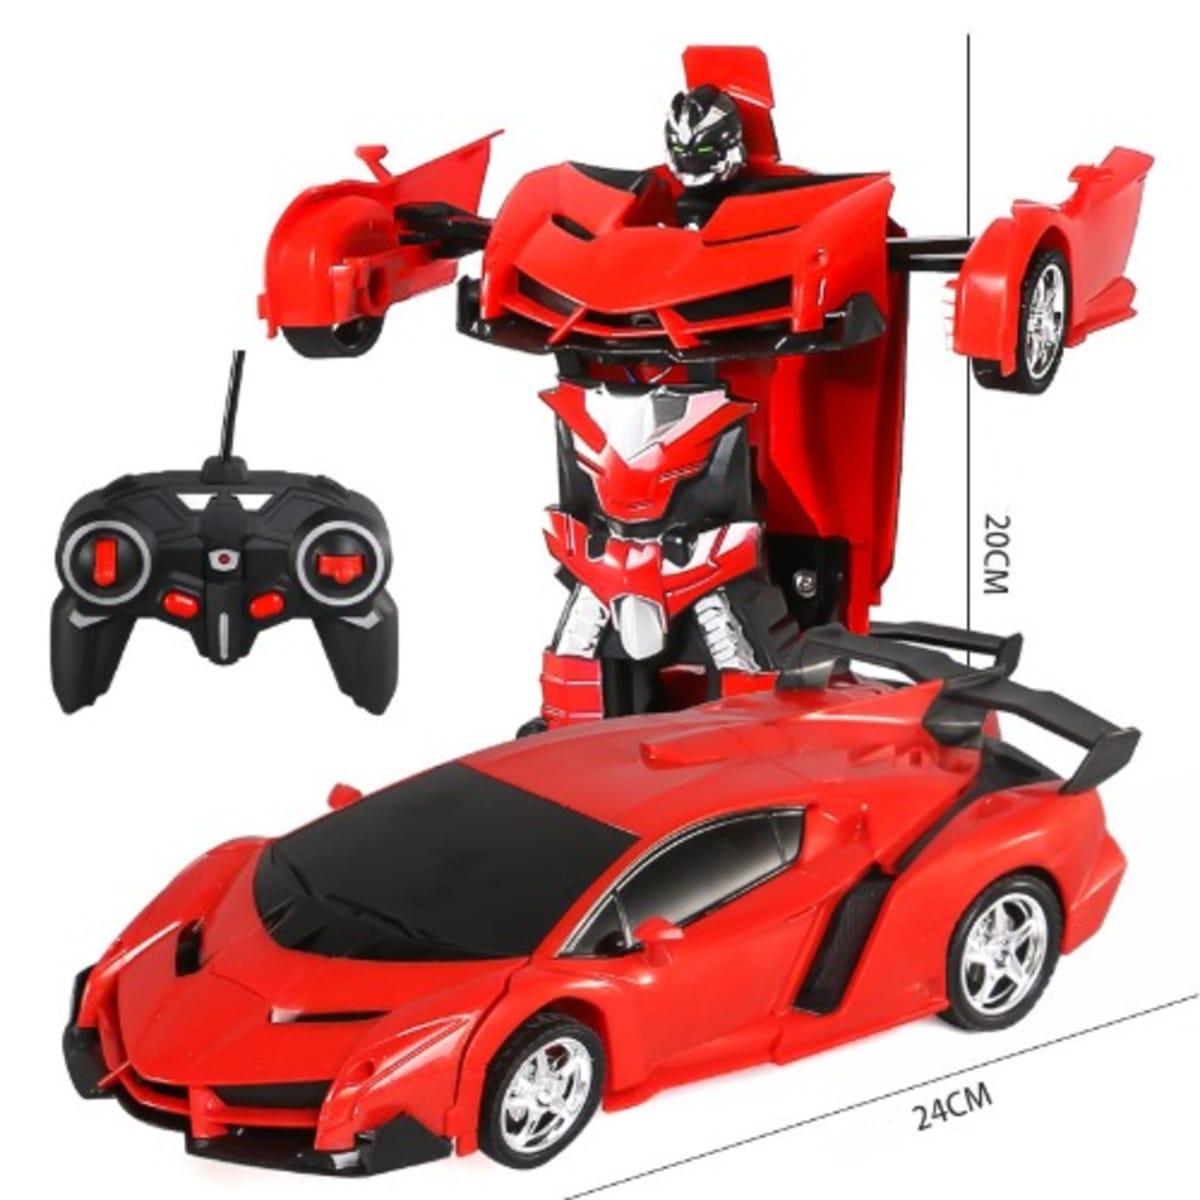 Remote Control Car 1:18 Scale Deformation Toy Car - Red